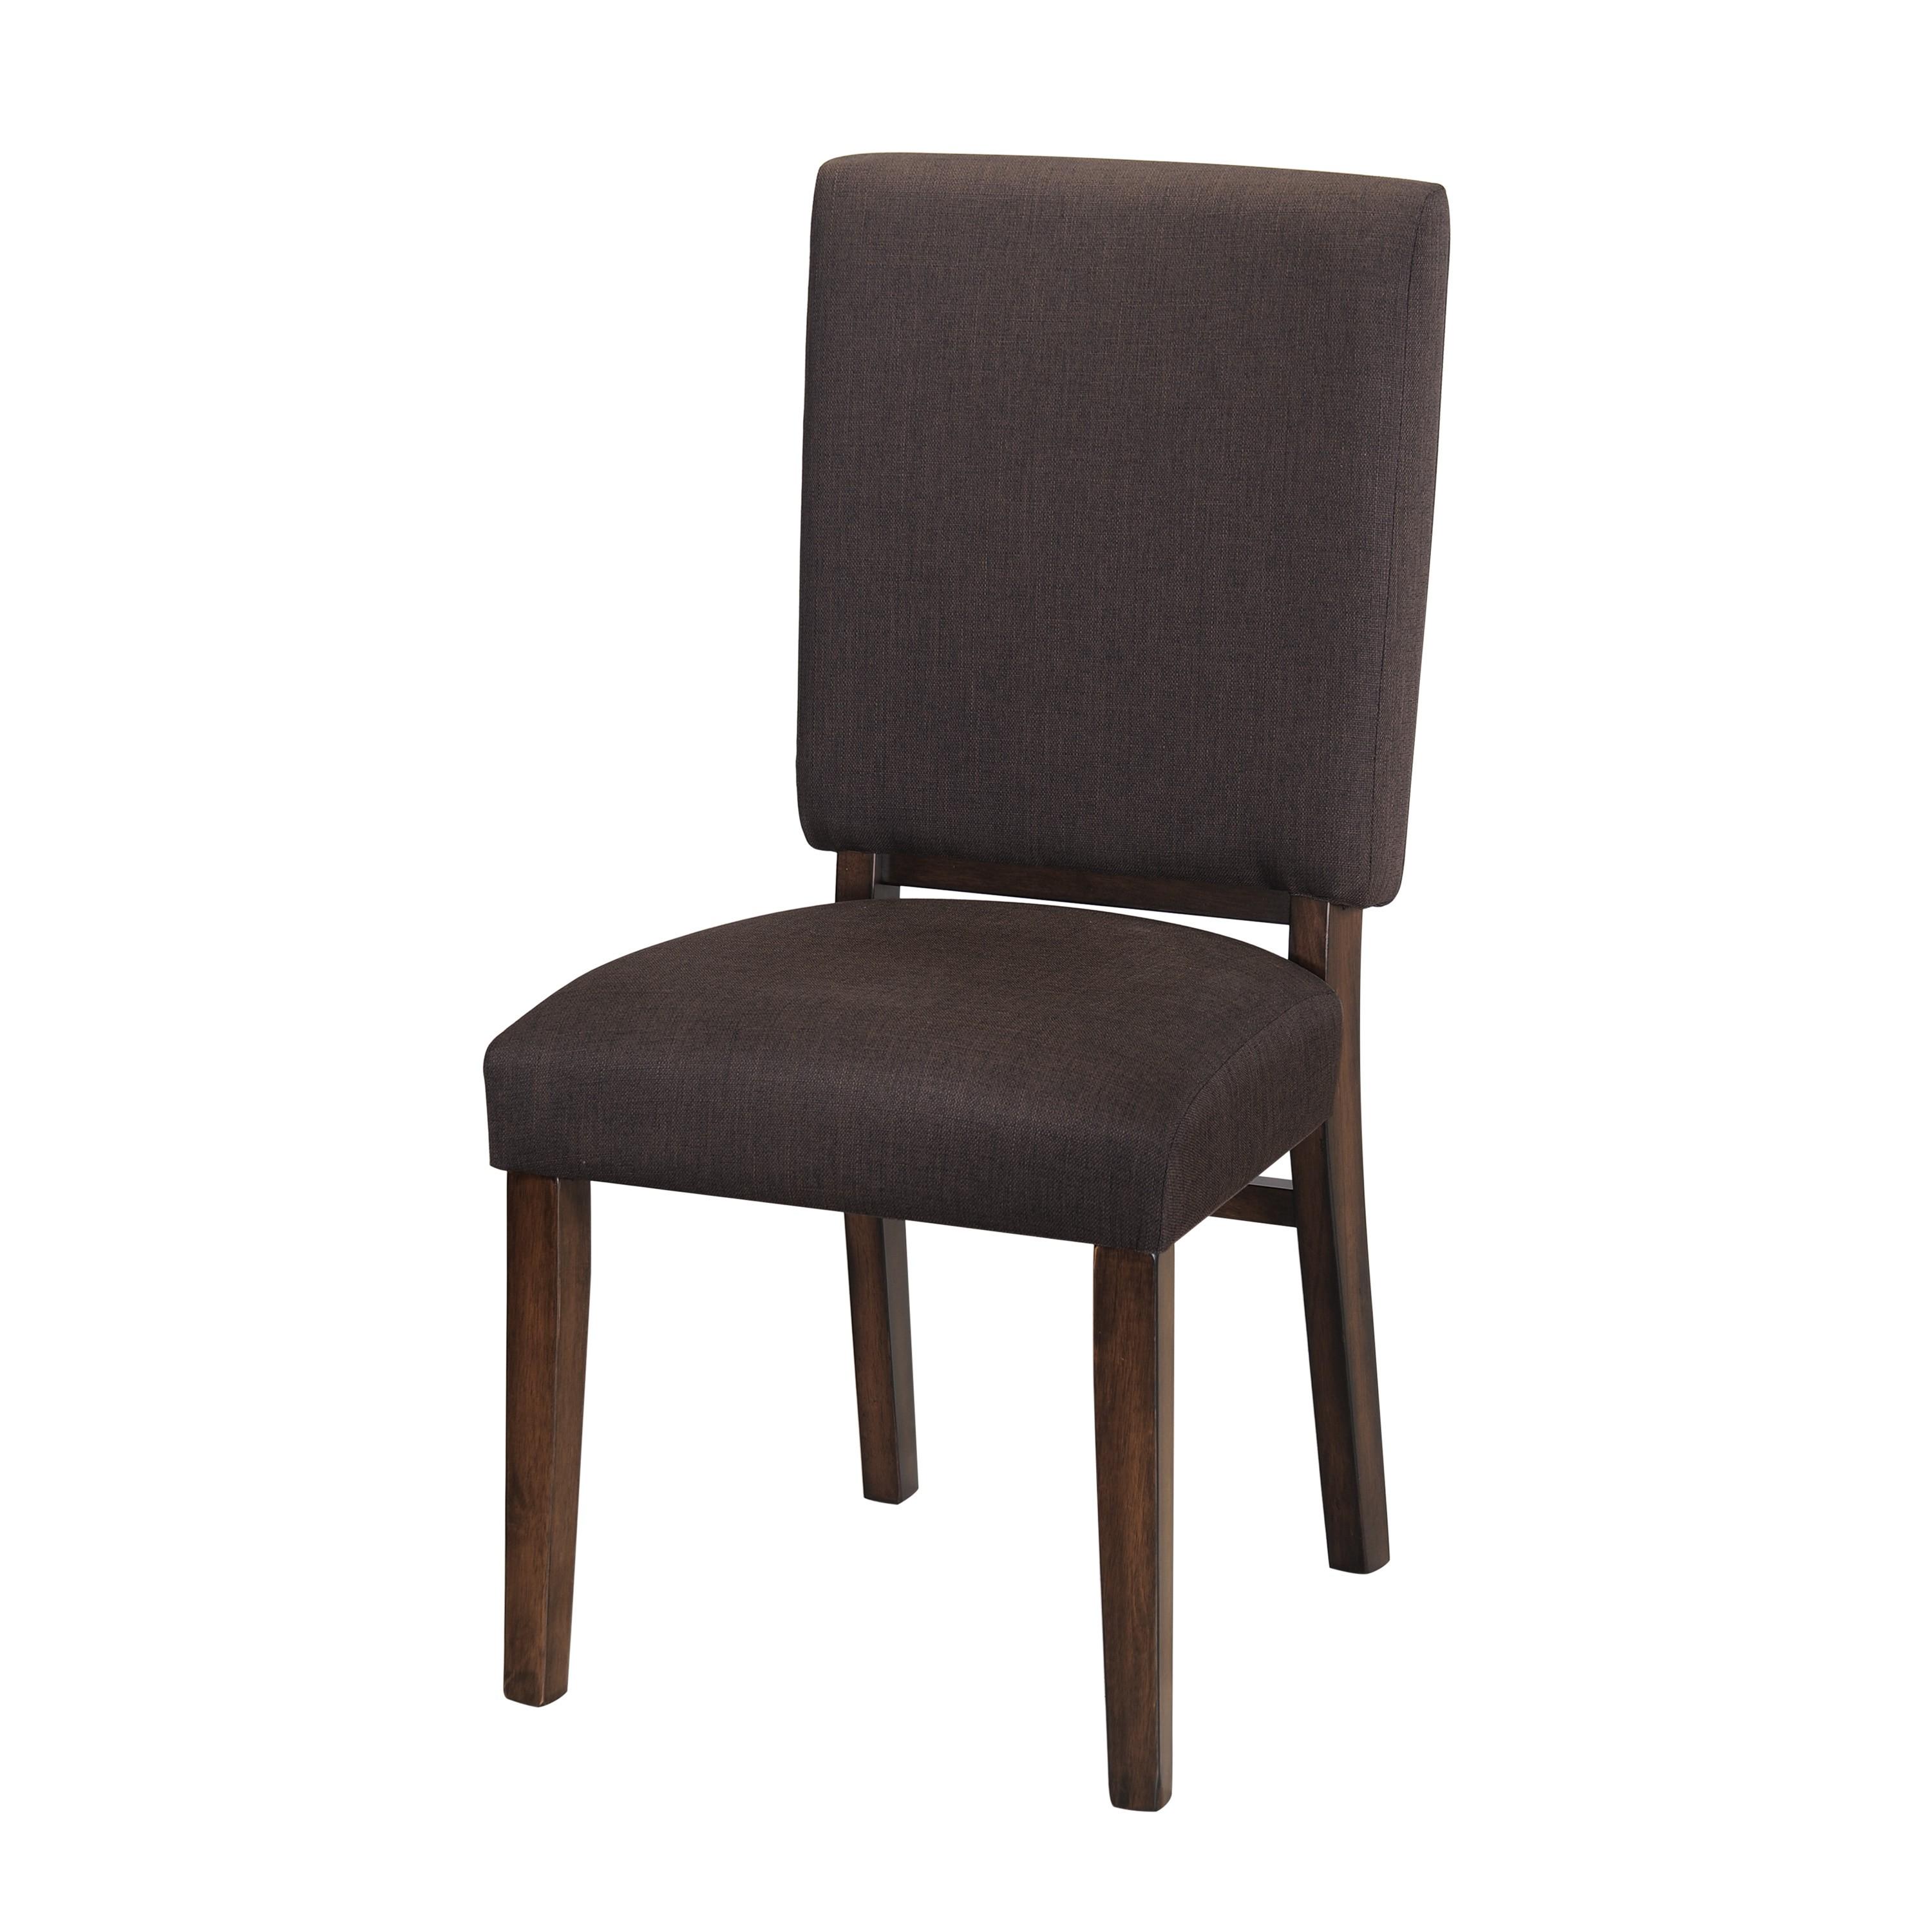 Transitional Side Chair Set 5415RFS Sedley 5415RFS in Walnut Polyester